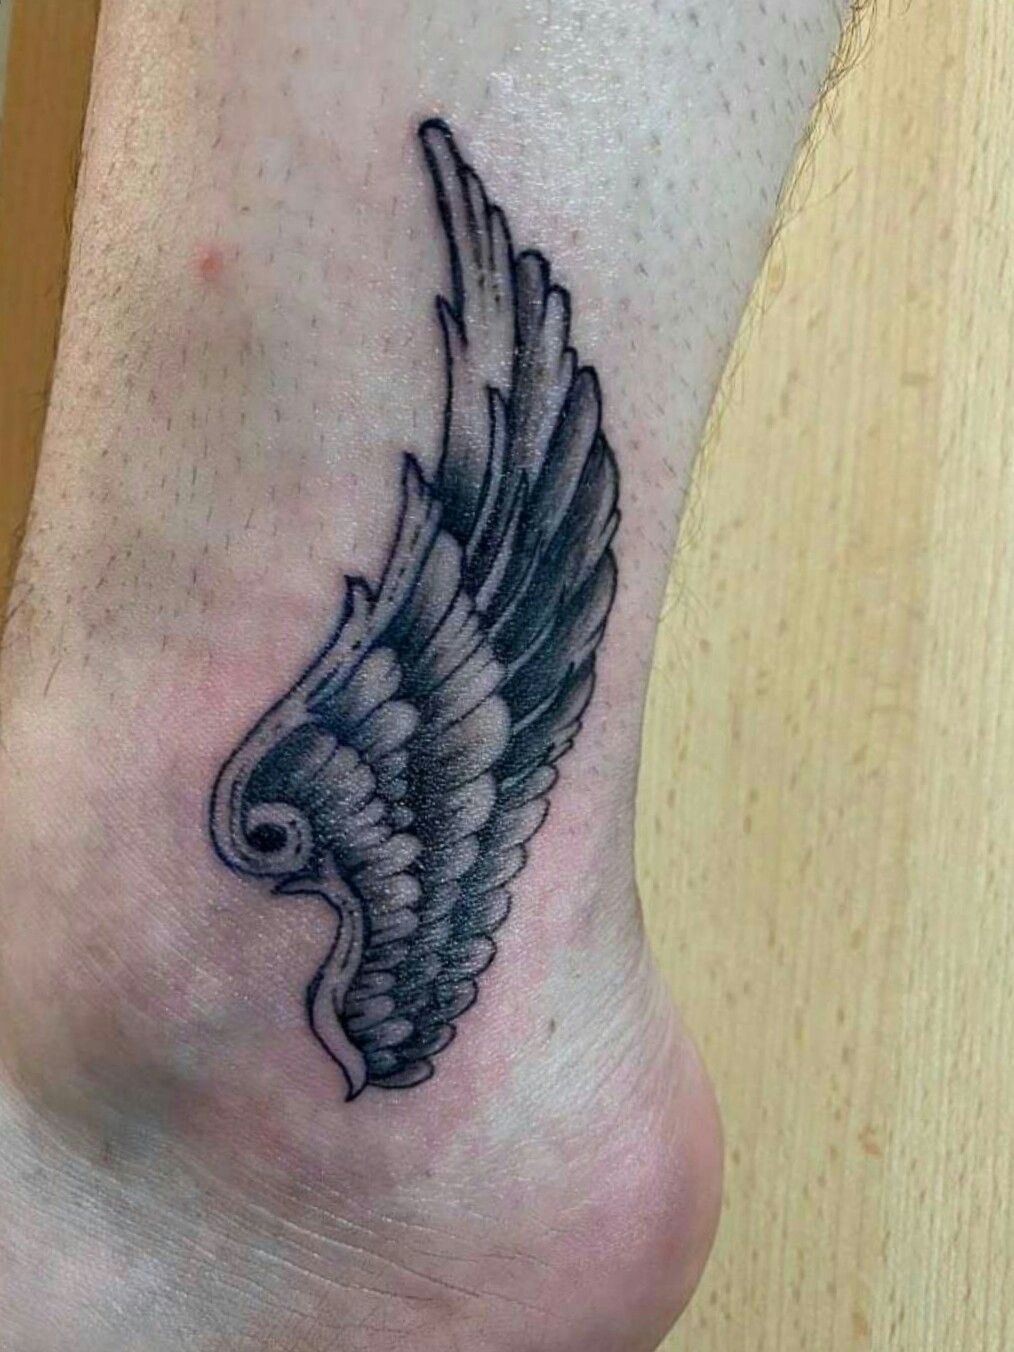 Hermes Wings Tattoo by kannasincolour on DeviantArt